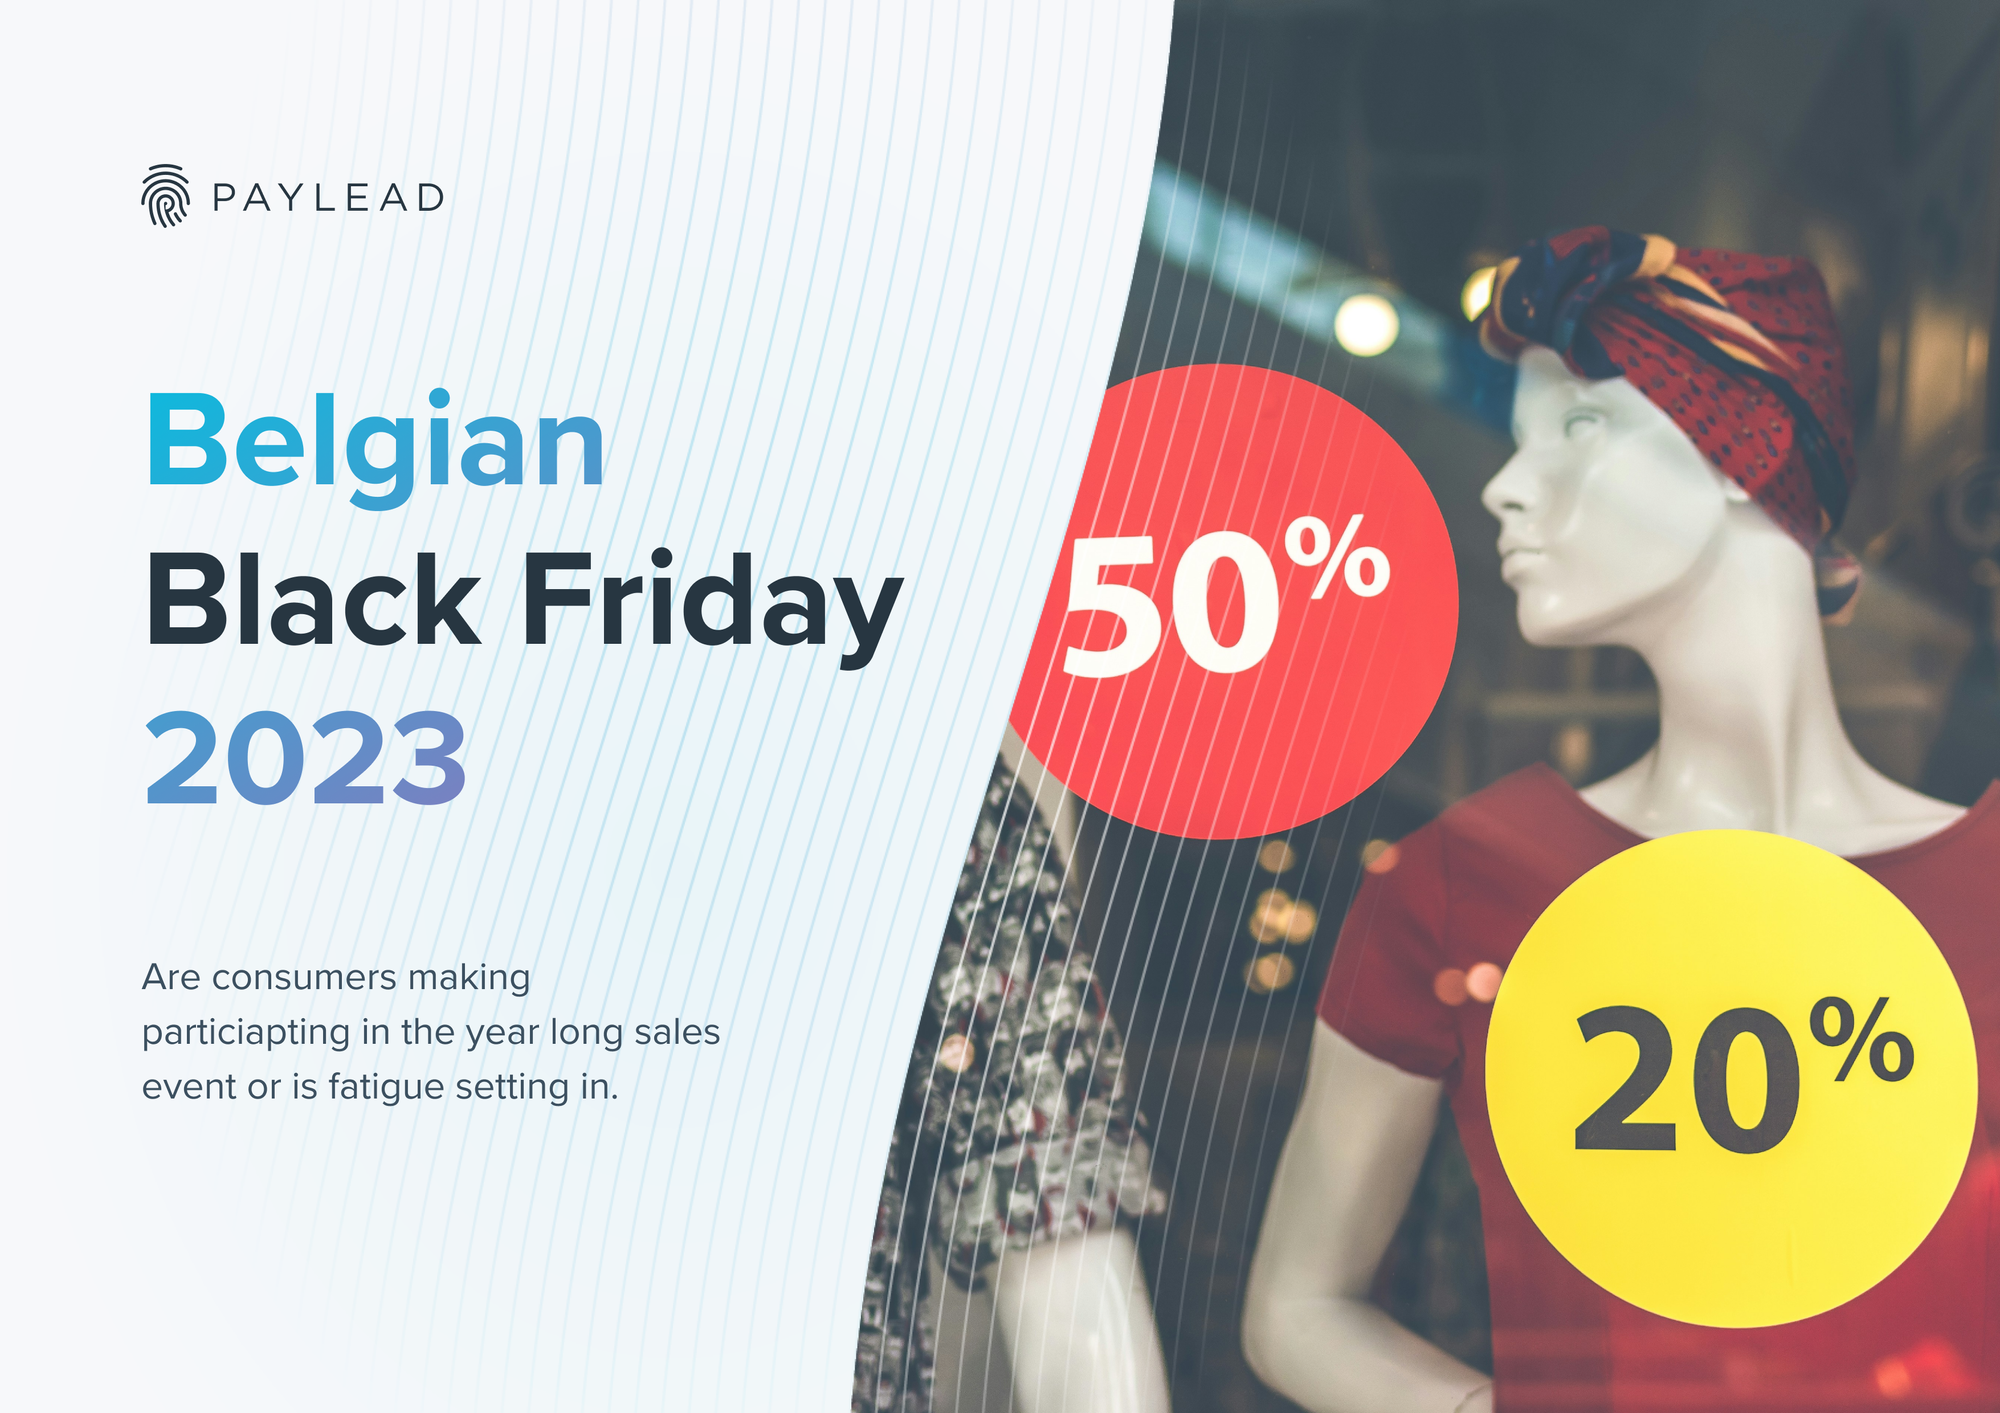 Belgian Black Friday Sales Results 2023